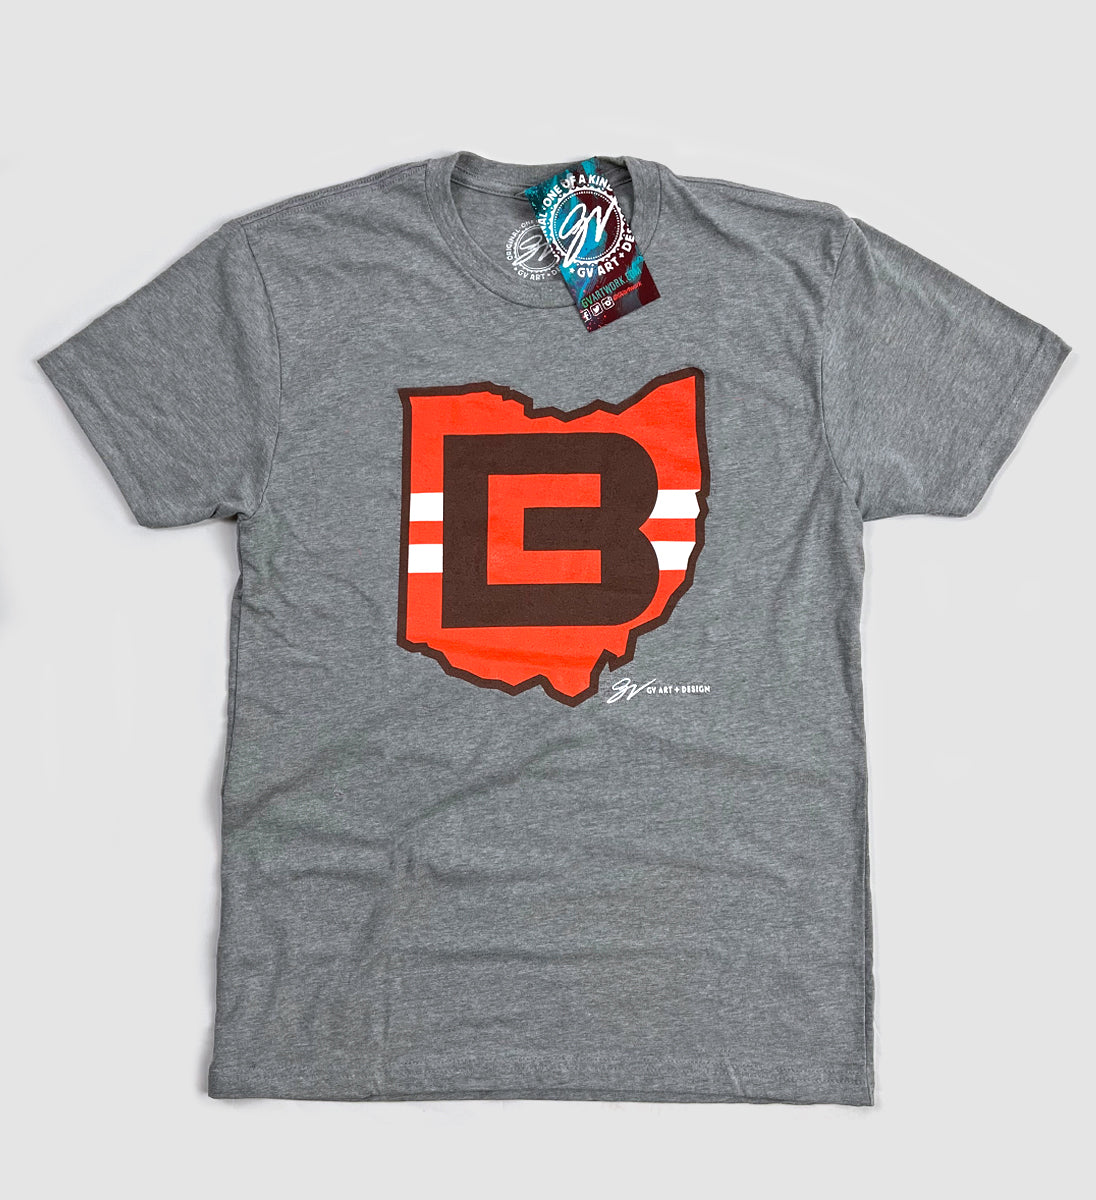 GV Art and Design Vintage Cleveland Baseball Navy T Shirt XXLarge